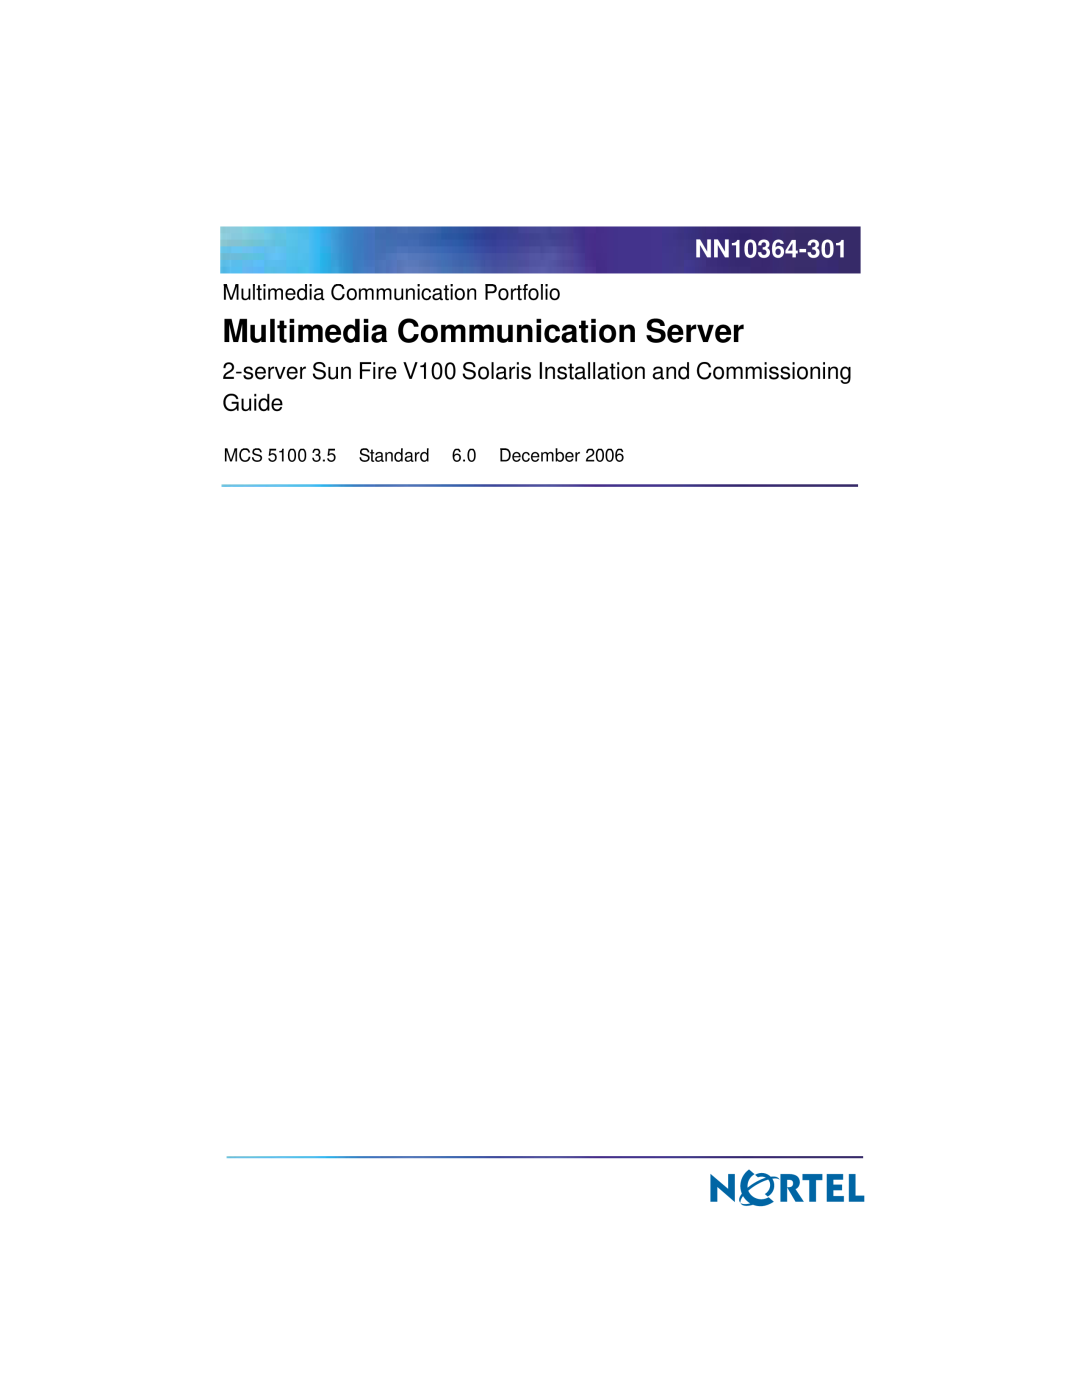 Nortel Networks V100 manual Multimedia Communication Server, NN10364-301 